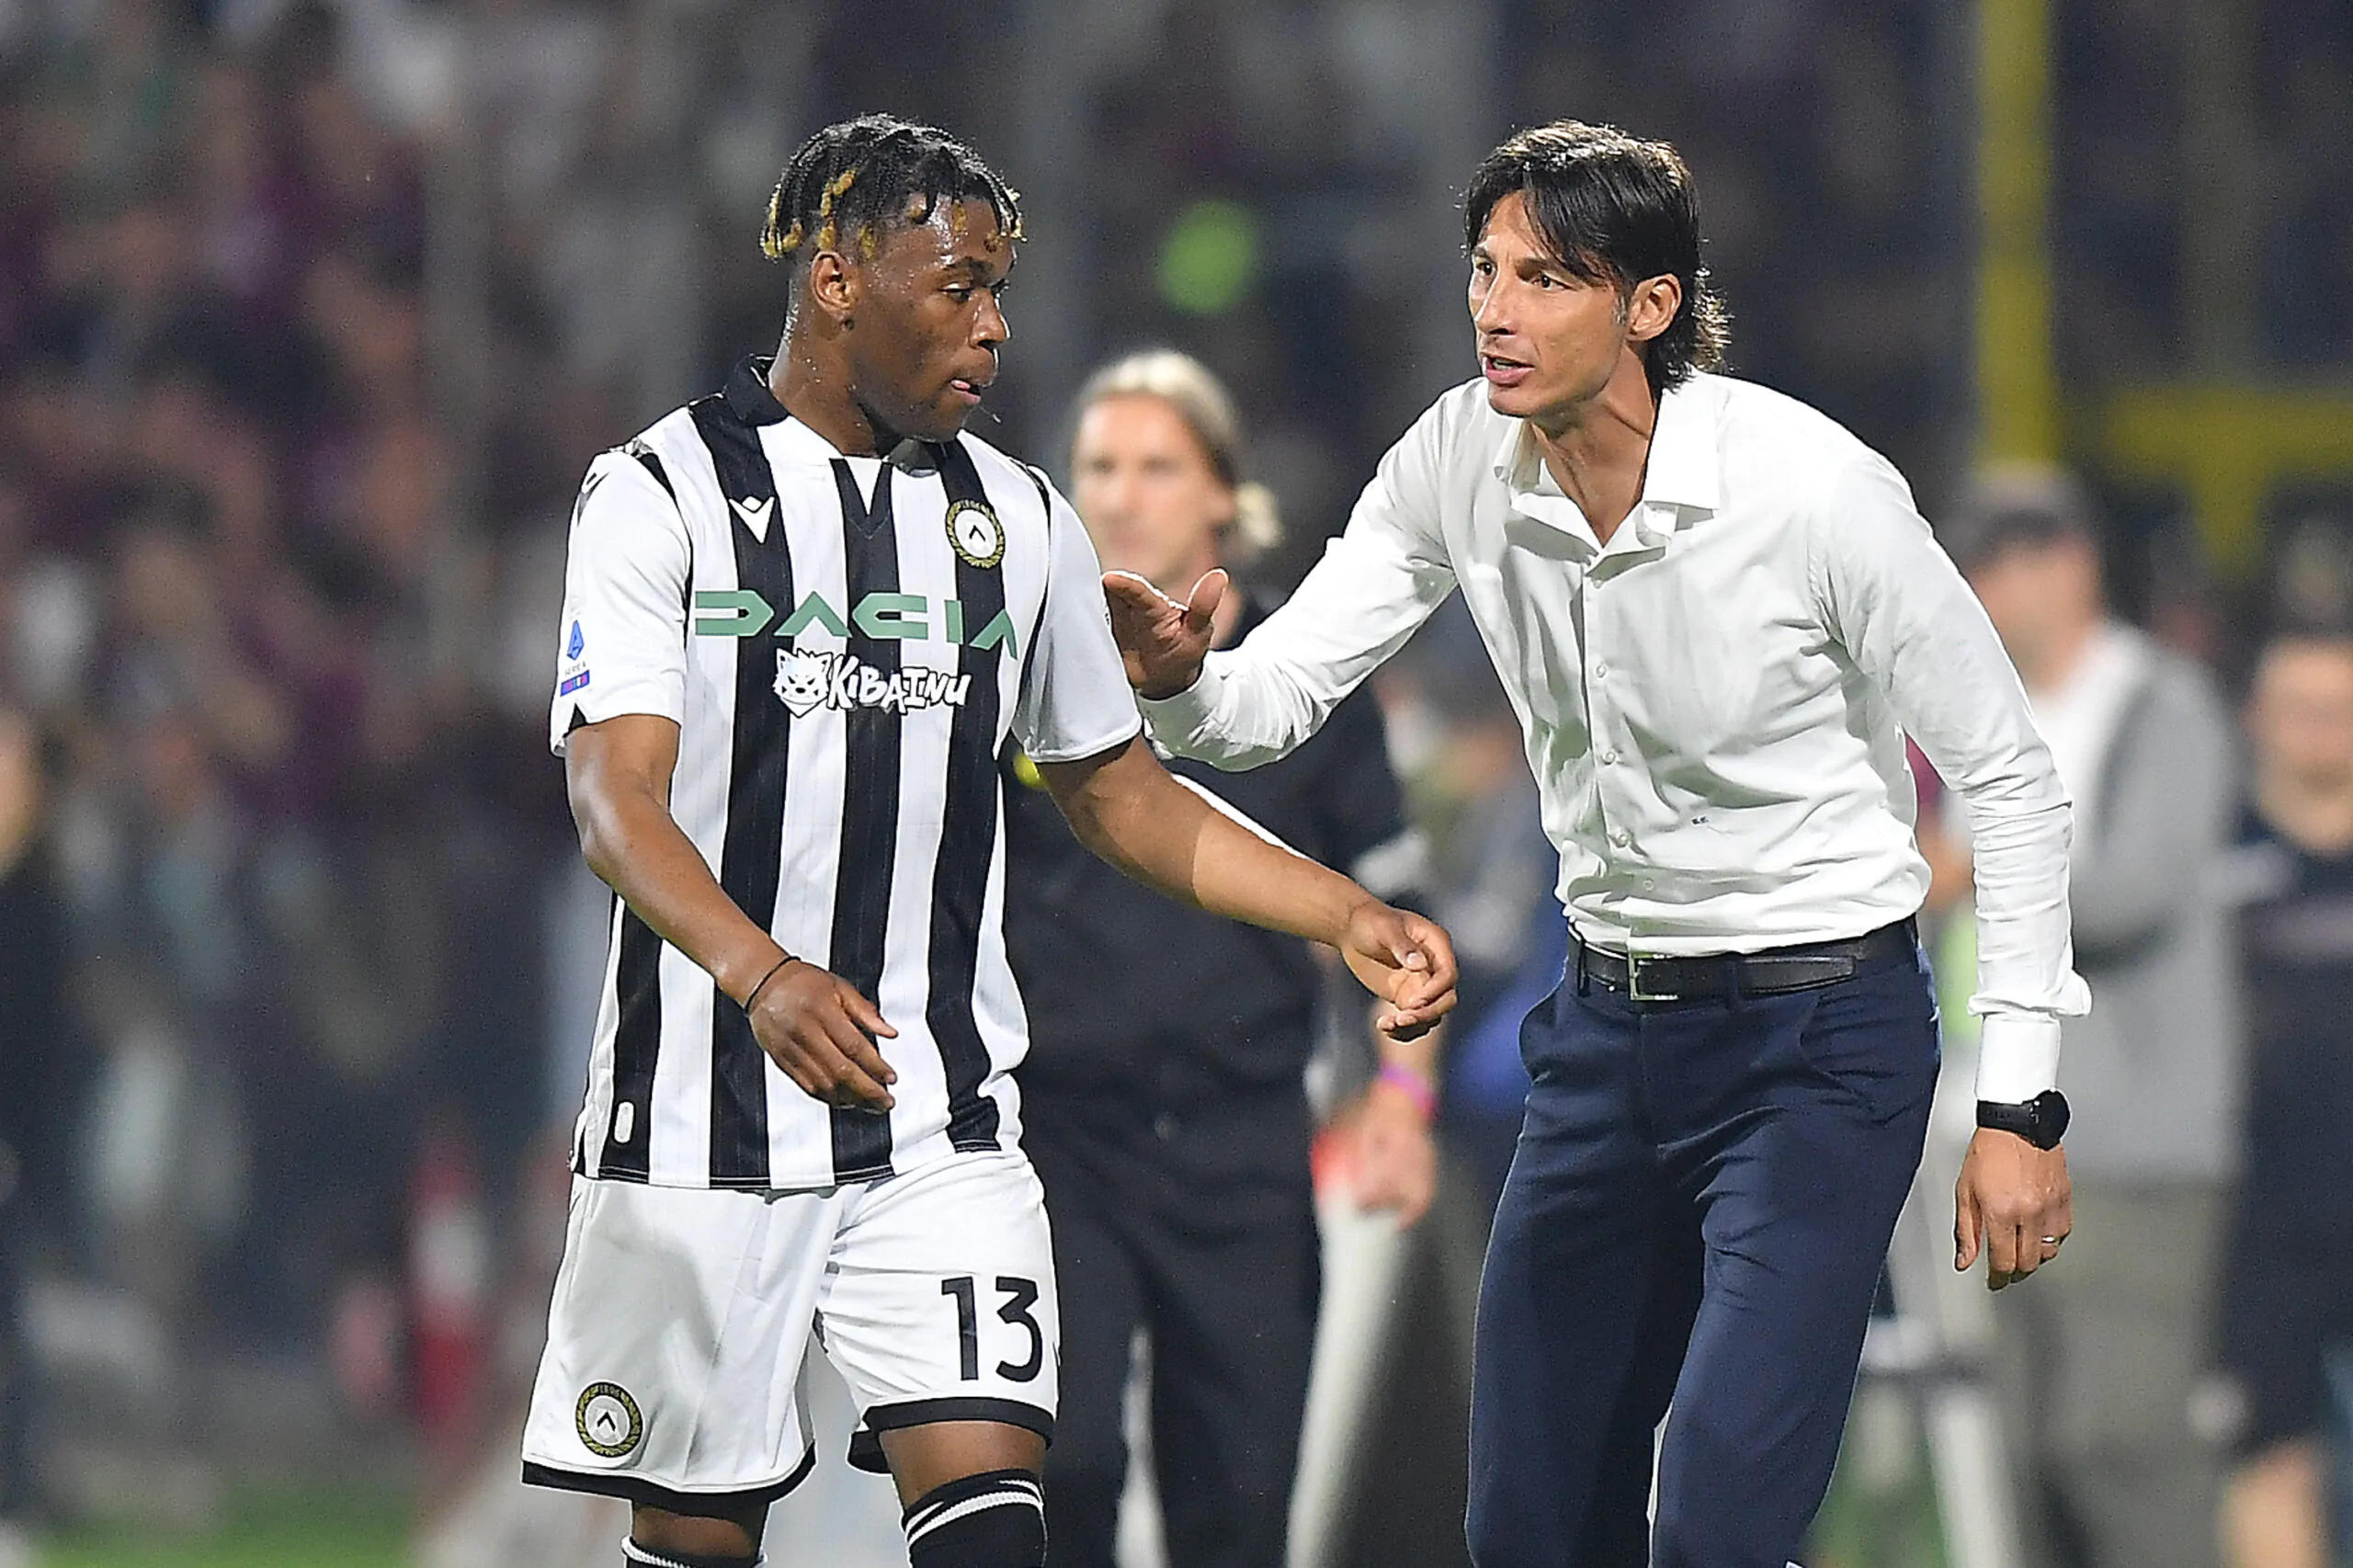 Udogie avvisa la Juventus: “In questo momento mi interessano due cose!”